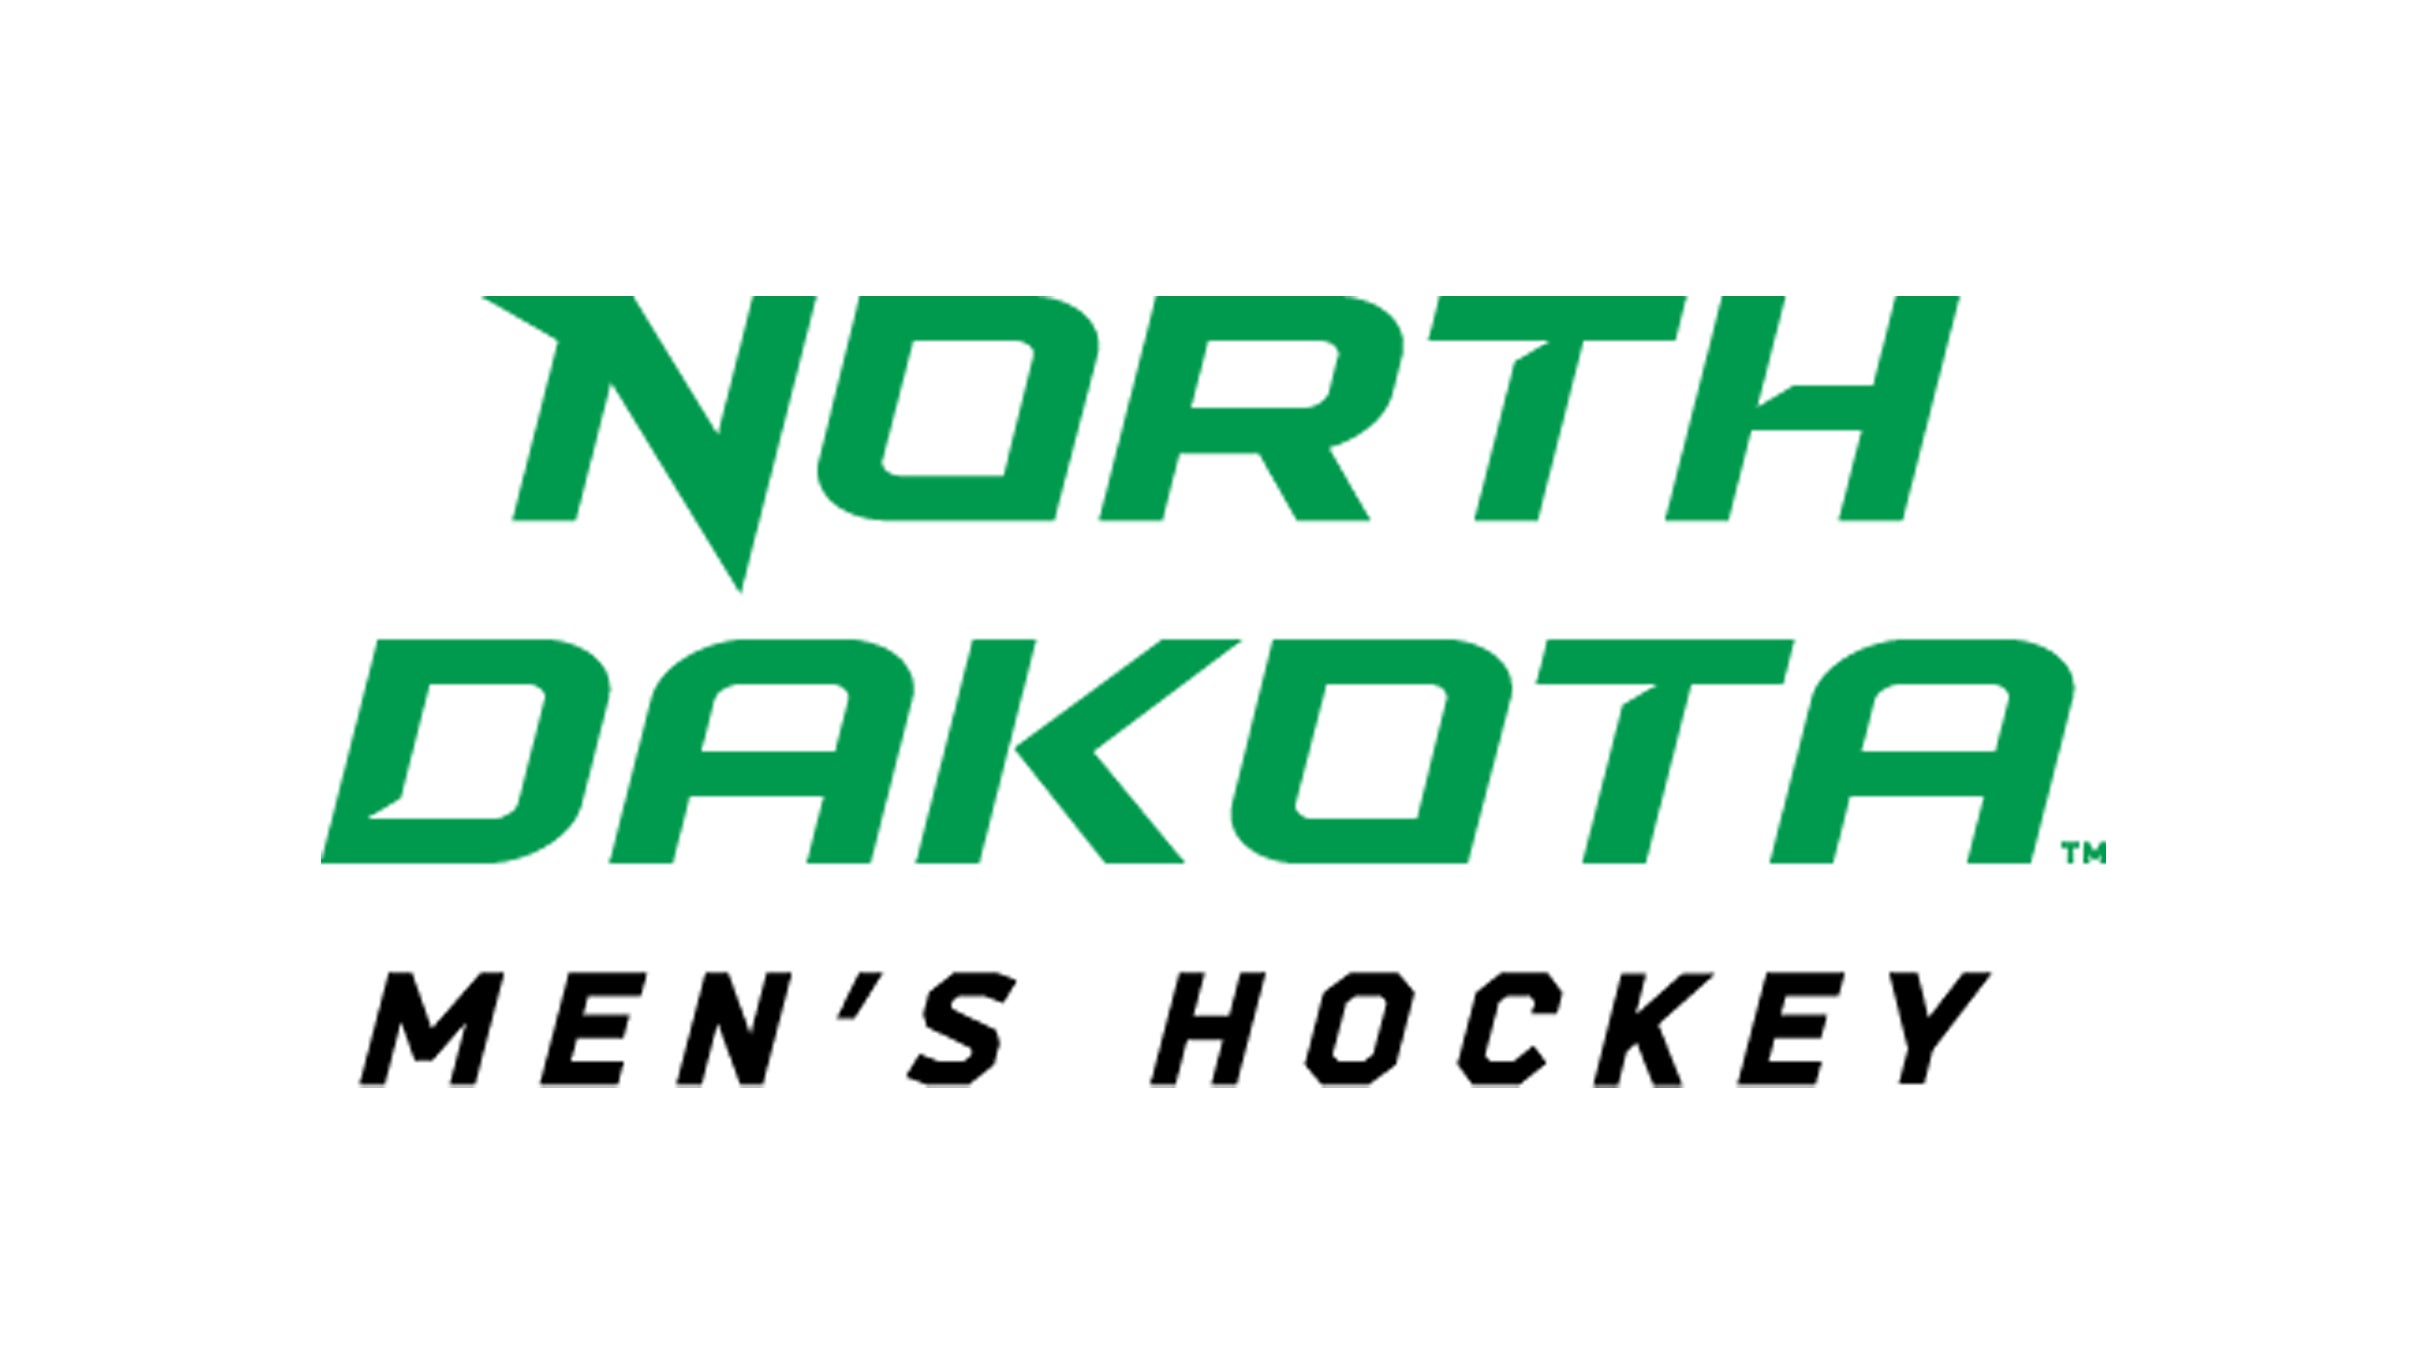 University of North Dakota Mens Hockey vs. University of Denver Pioneers Hockey in Grand Forks promo photo for NDCC presale offer code